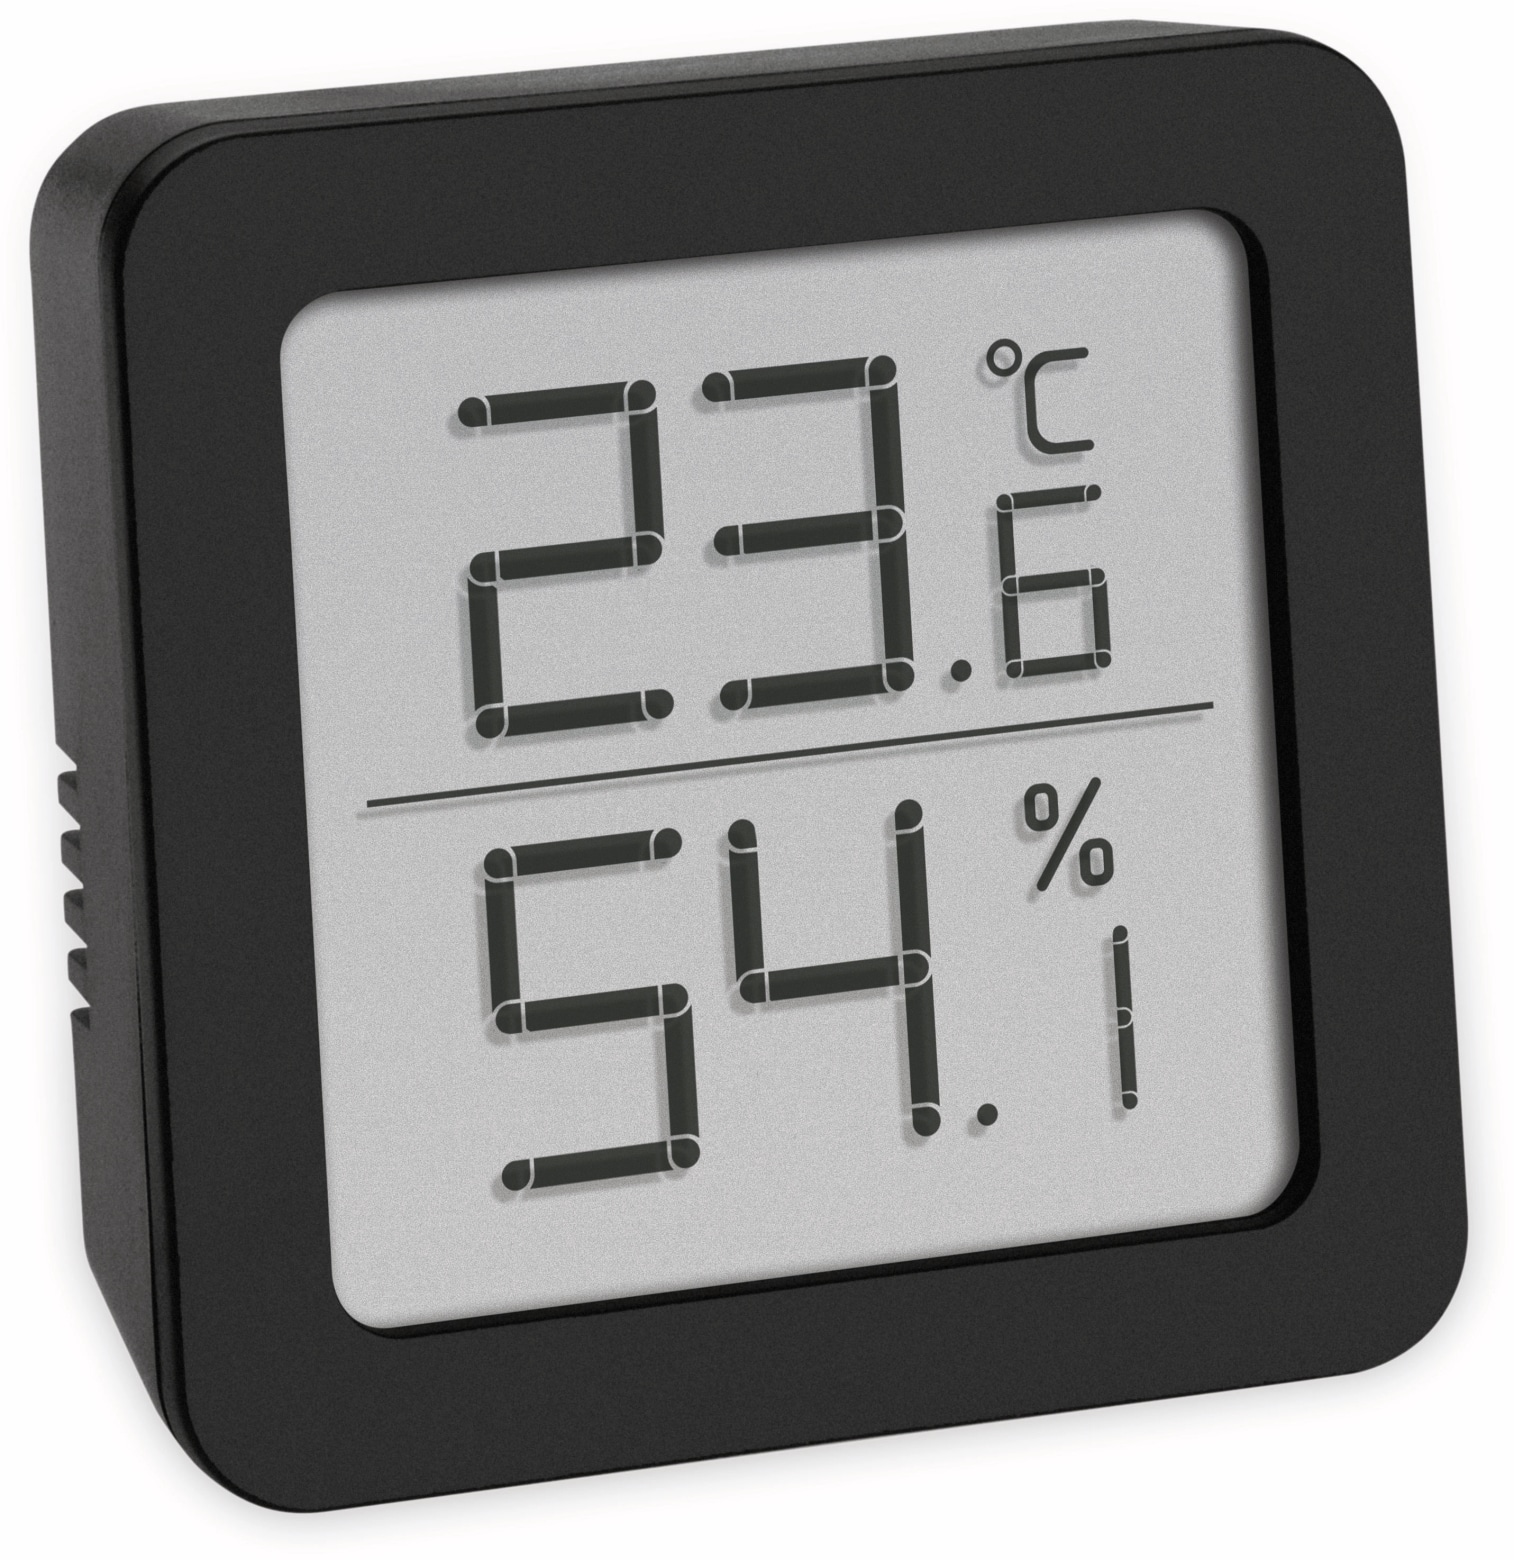 TFA Digitales Thermo-Hygrometer schwarz, 30.5051.01